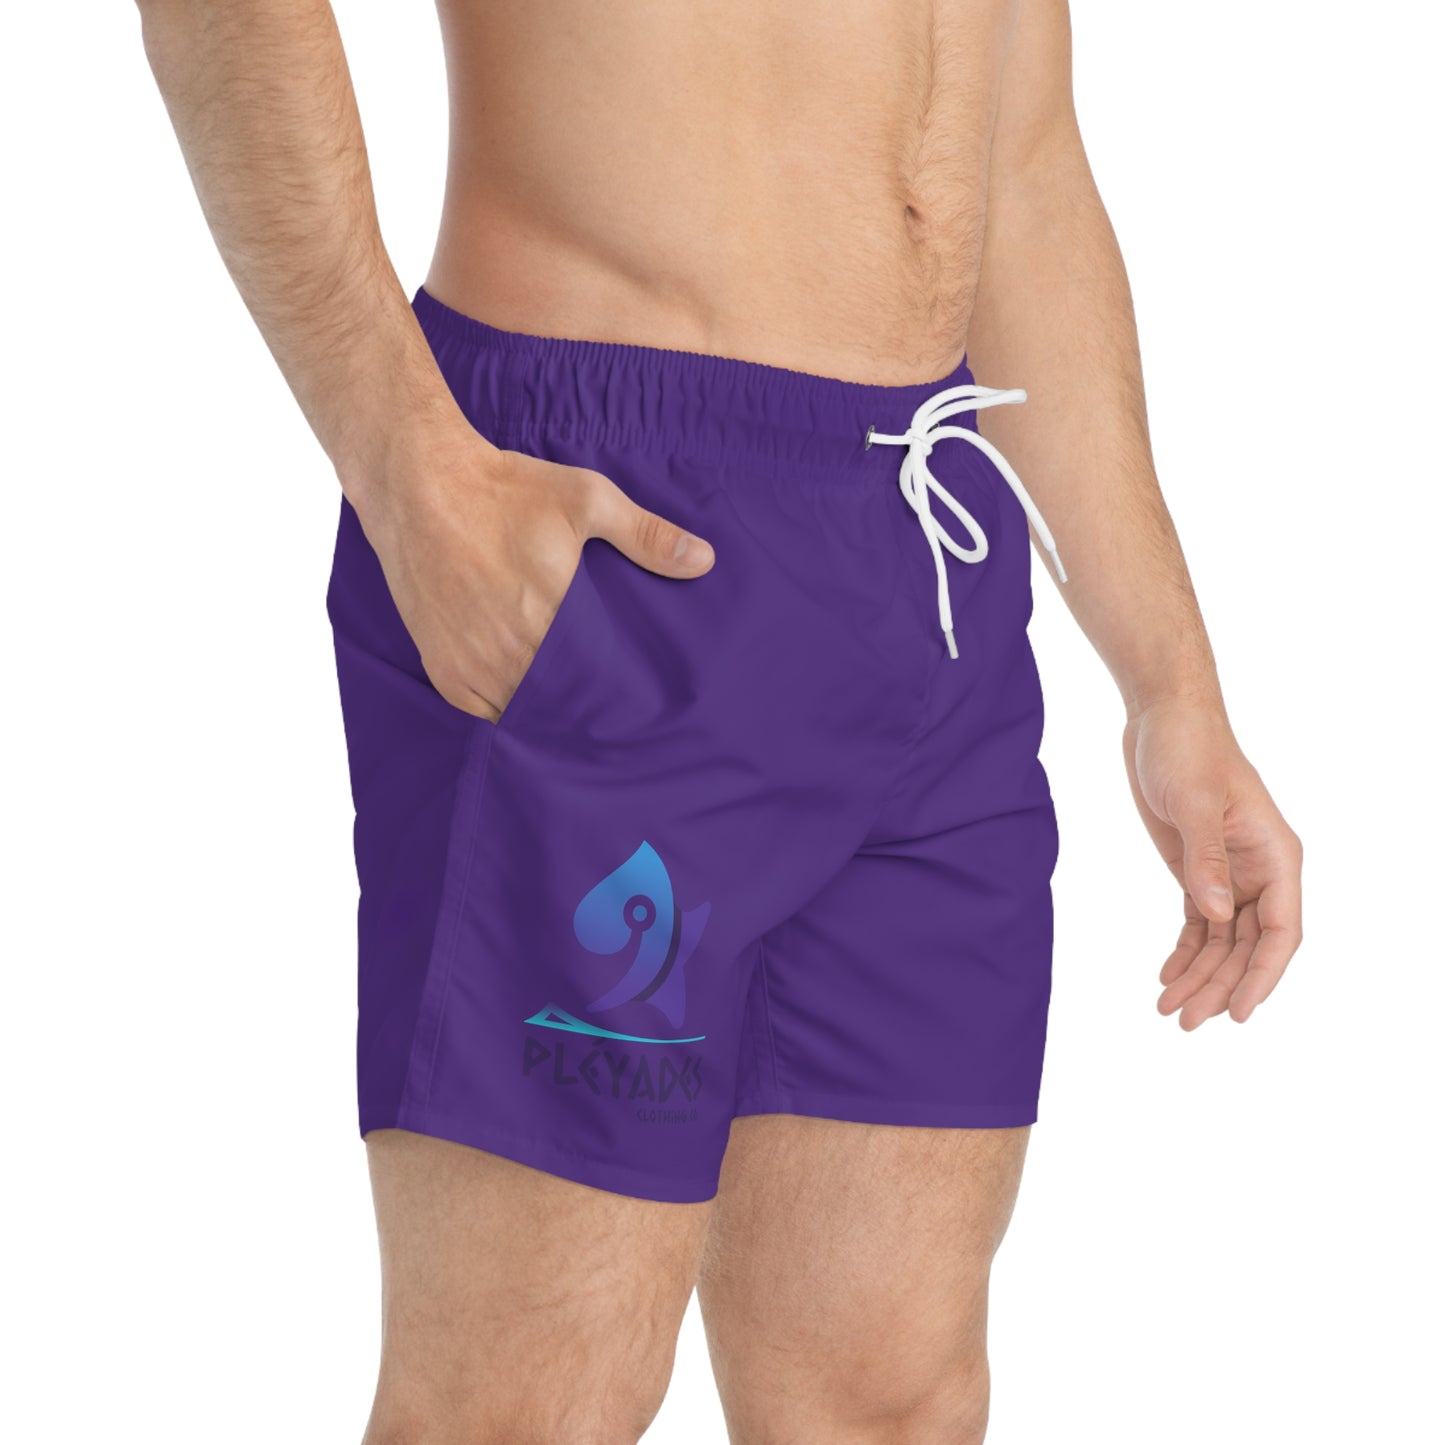 Pleyades Purple Small front logo Swim Trunks